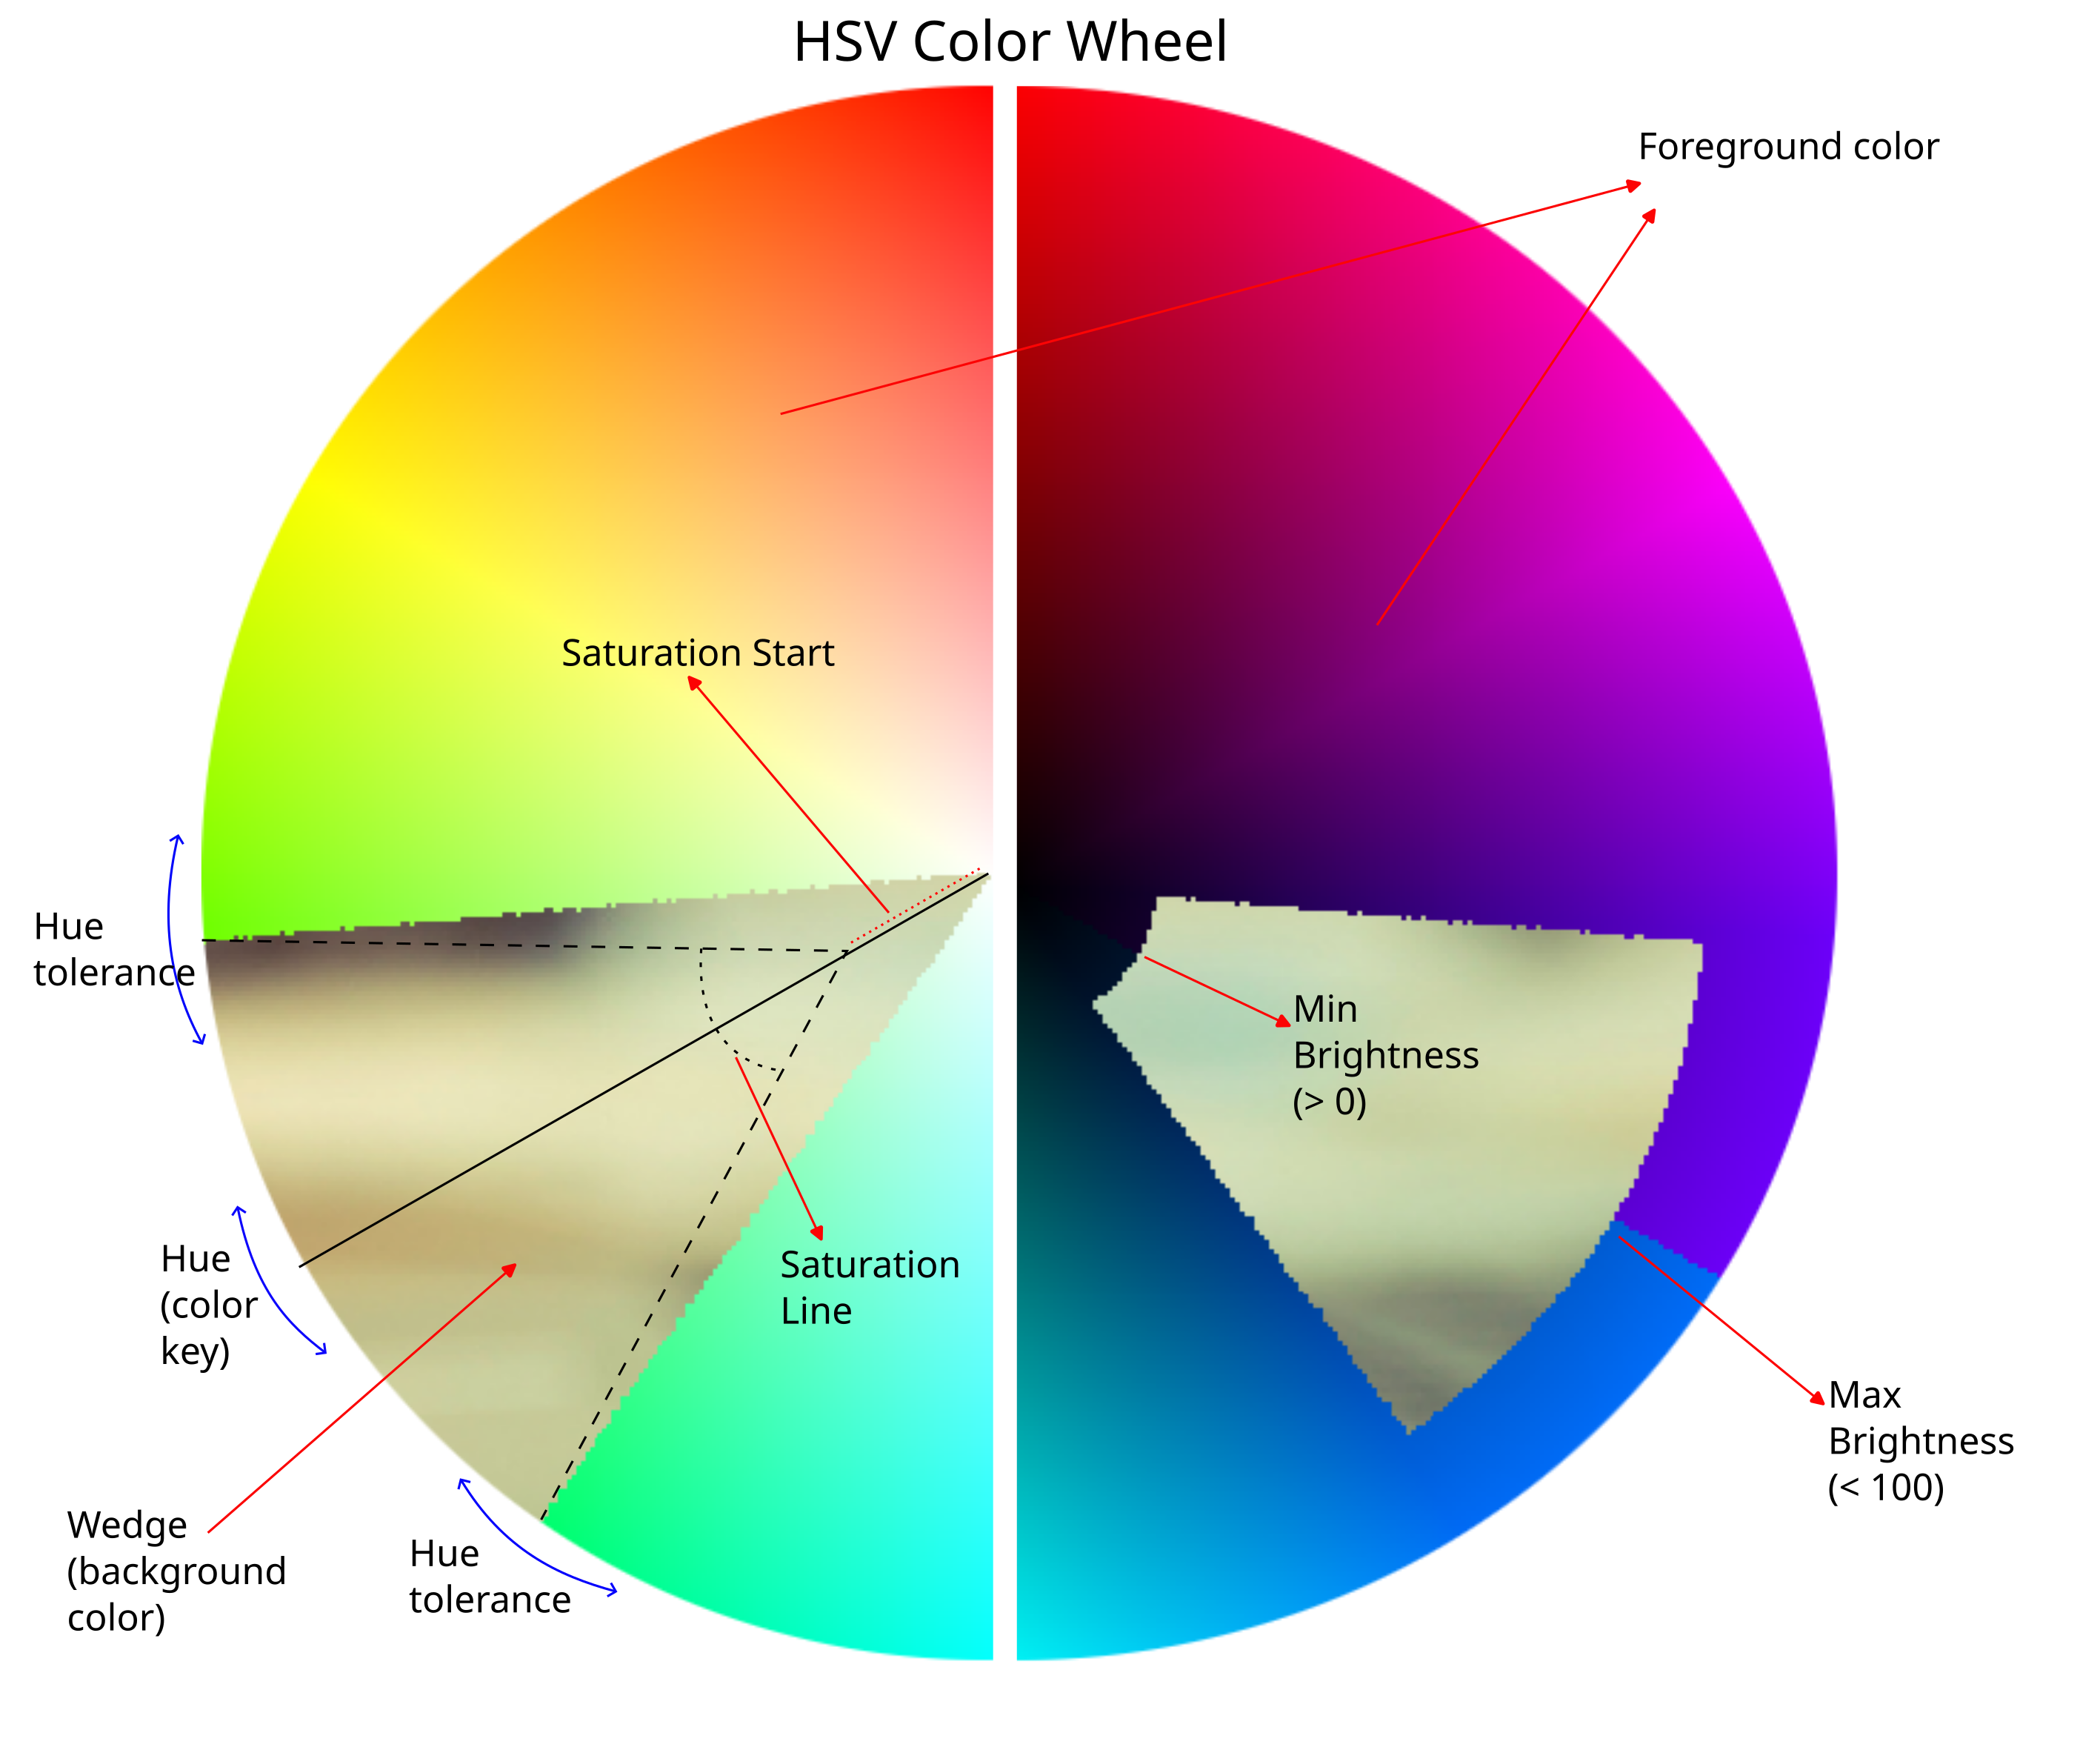 images/hsv_color_wheel.png